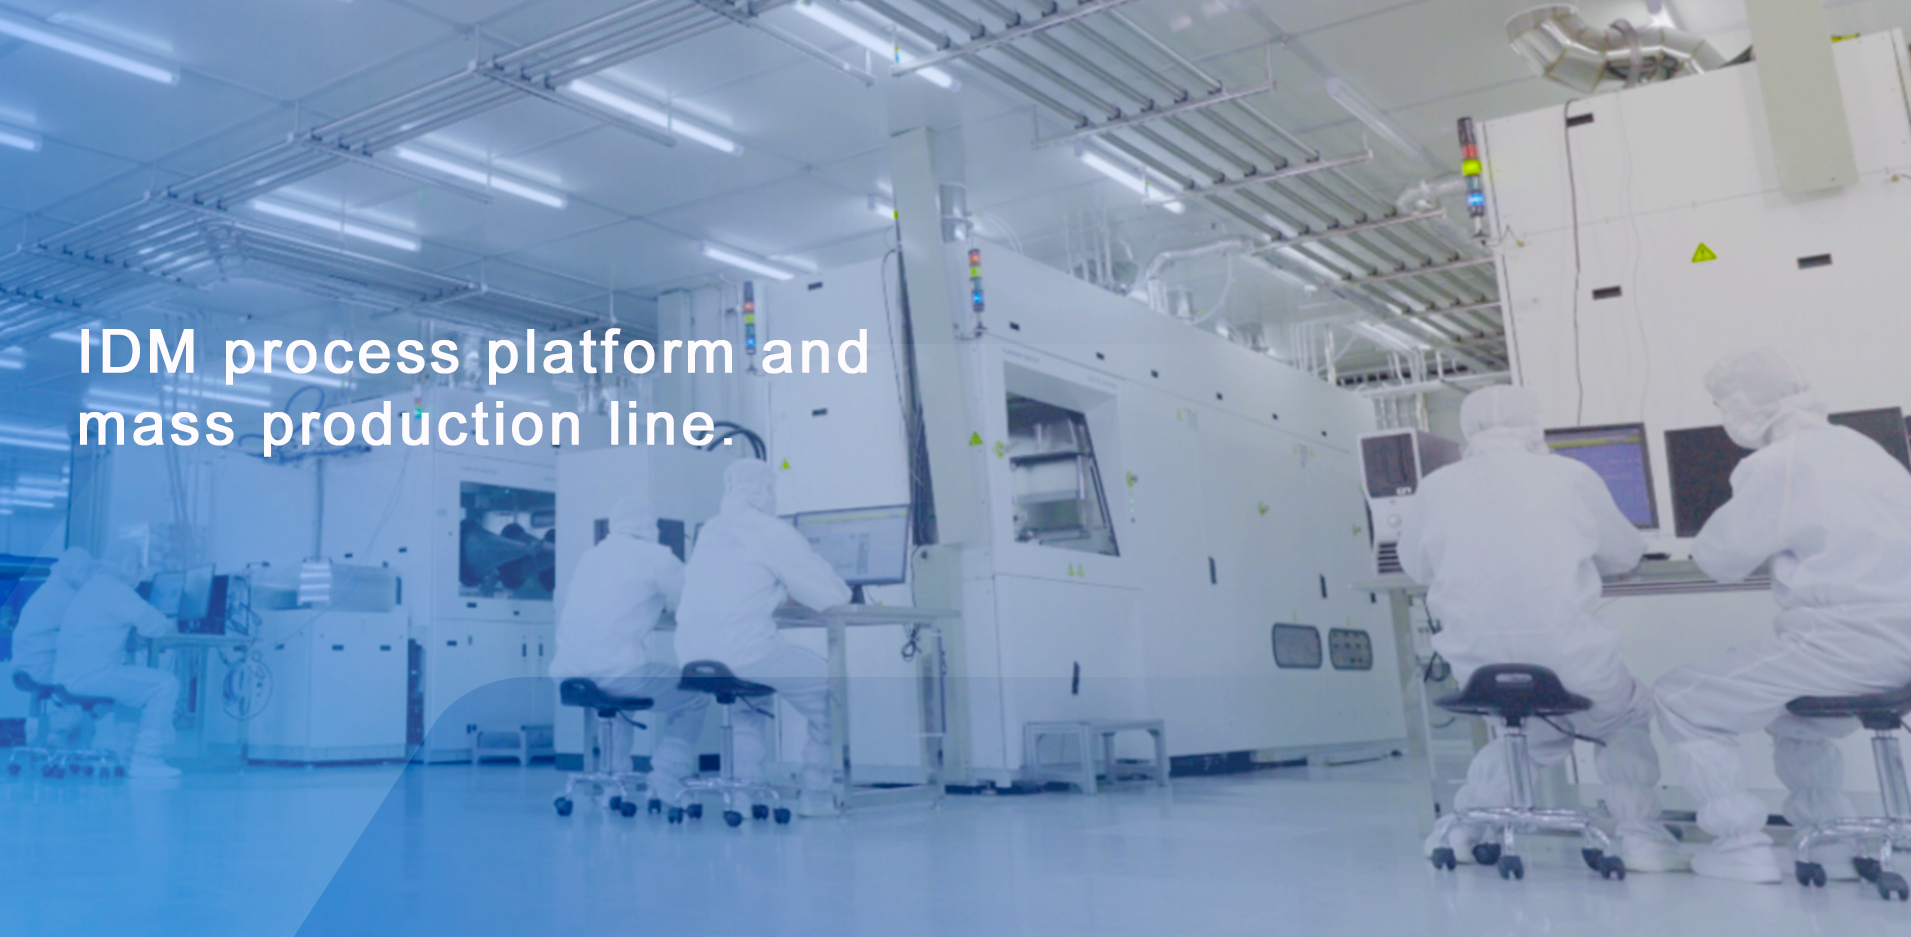 IDM process platform and mass production line